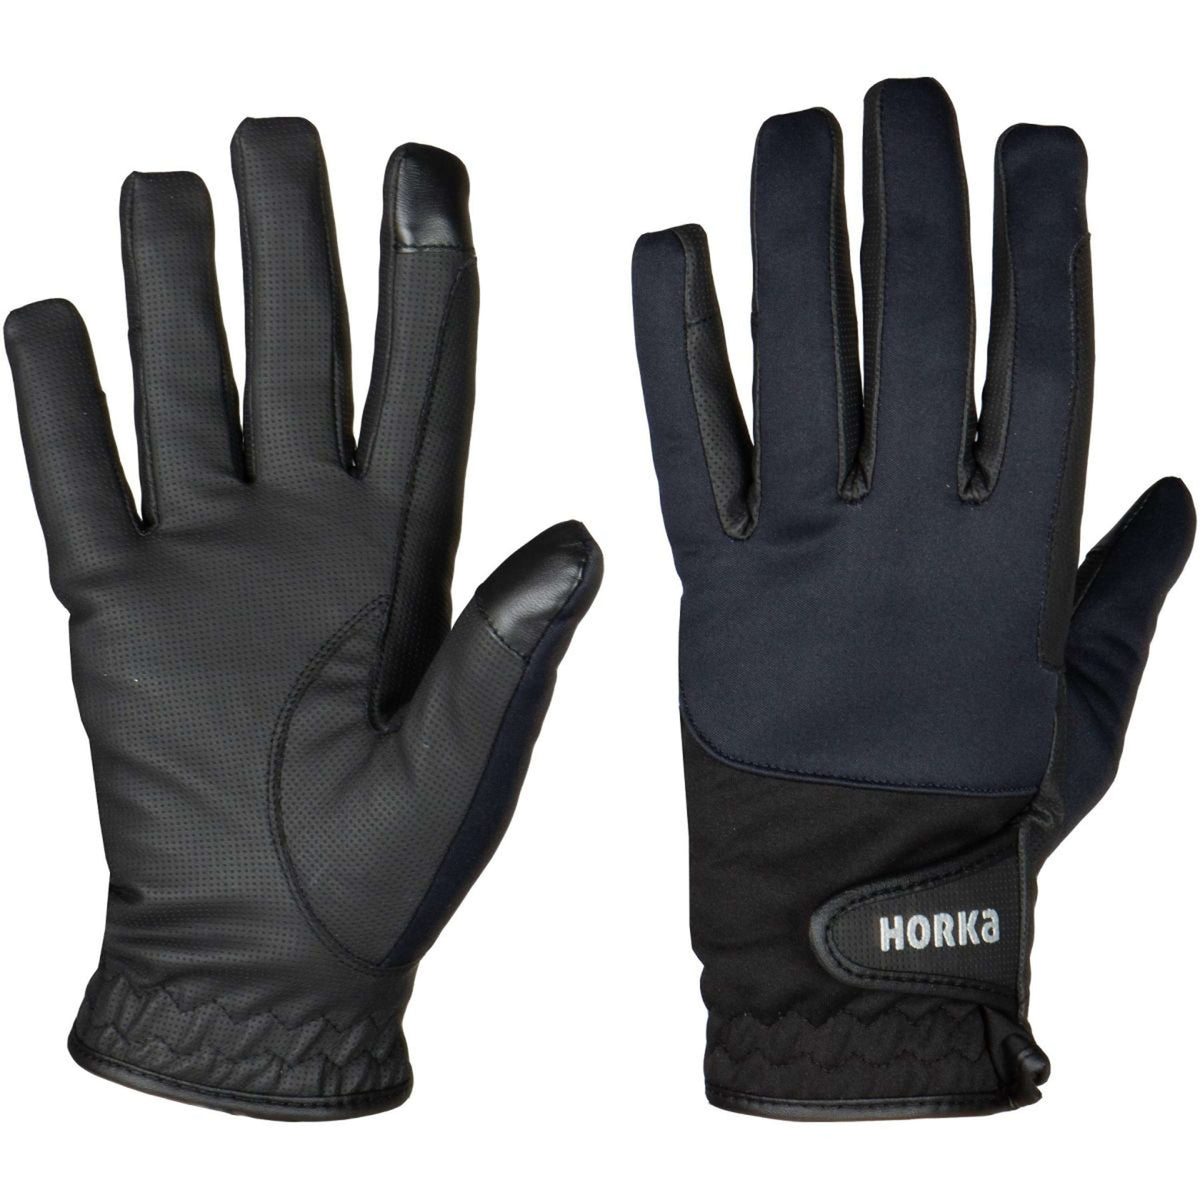 Horka Handschuhe Outdoor Kinder Blau/Schwarz